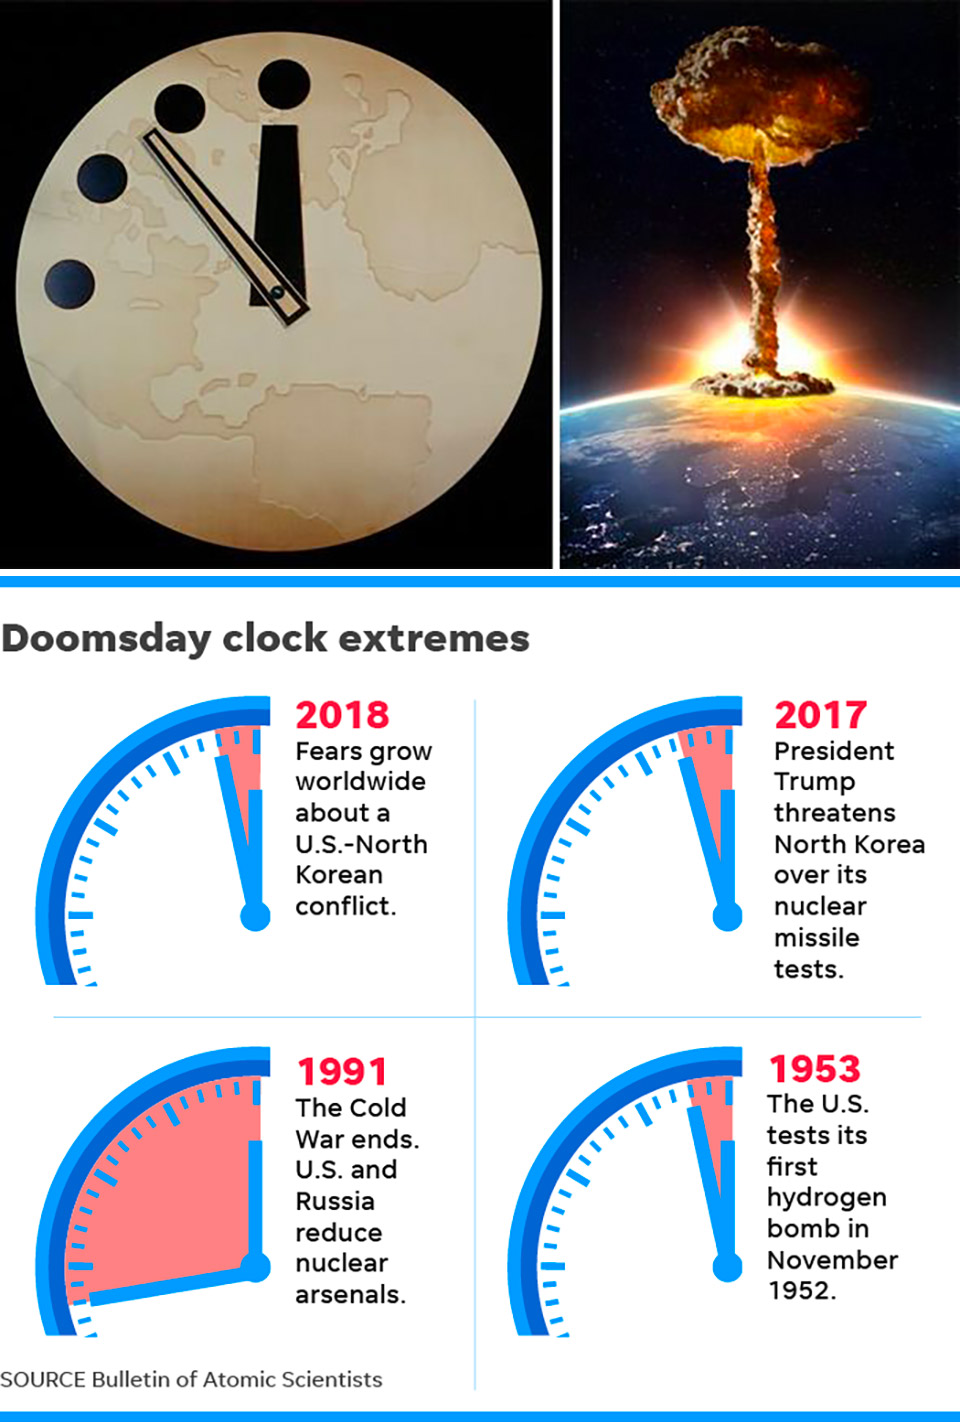 Doomsday Clock 2 Minutes to Midnight